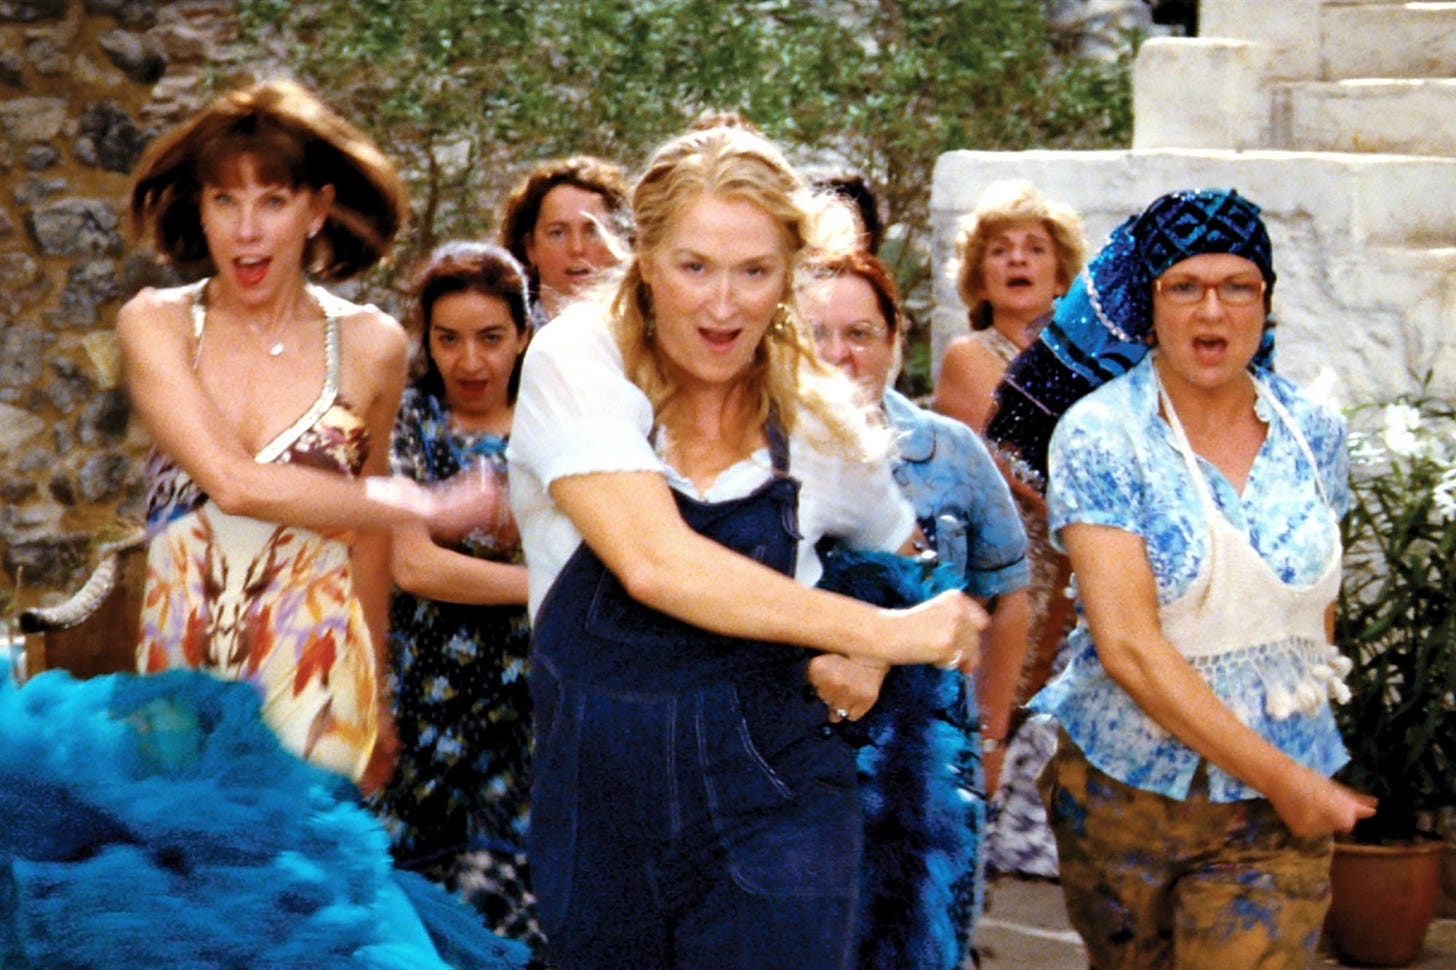 Mamma Mia returning to theaters for 10th anniversary screenings | EW.com